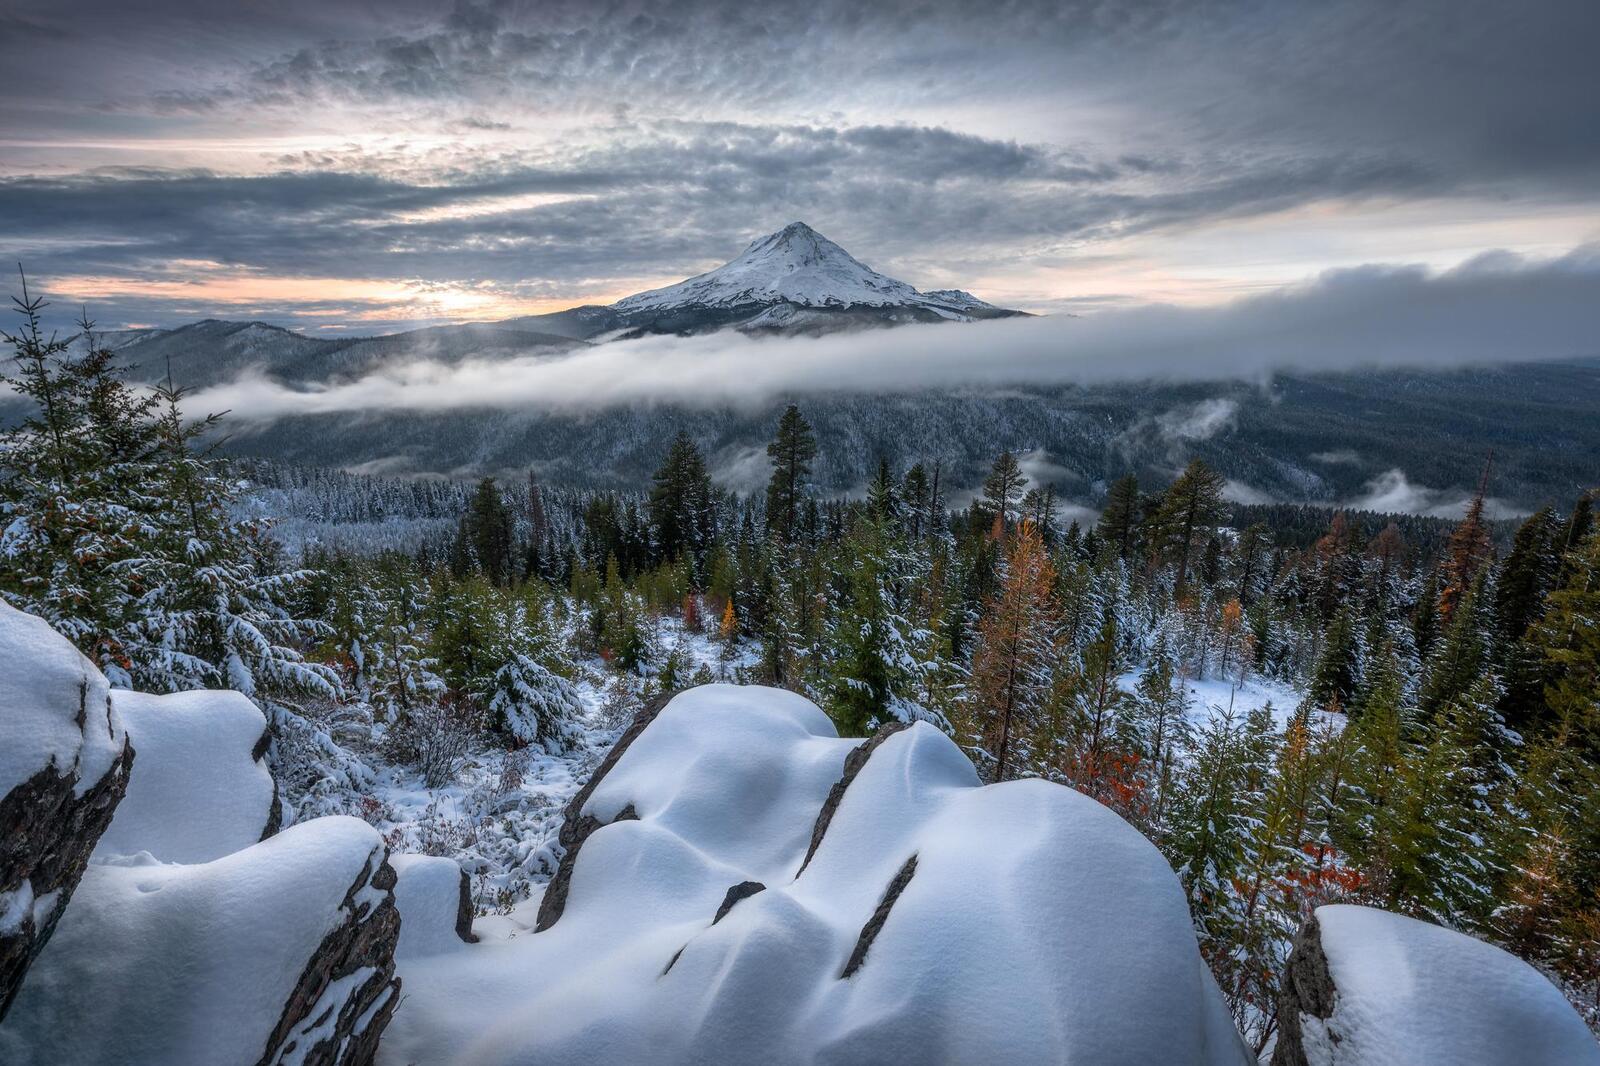 Wallpapers The highest mountain in Oregon mount hood Mount Hood Oregon on the desktop